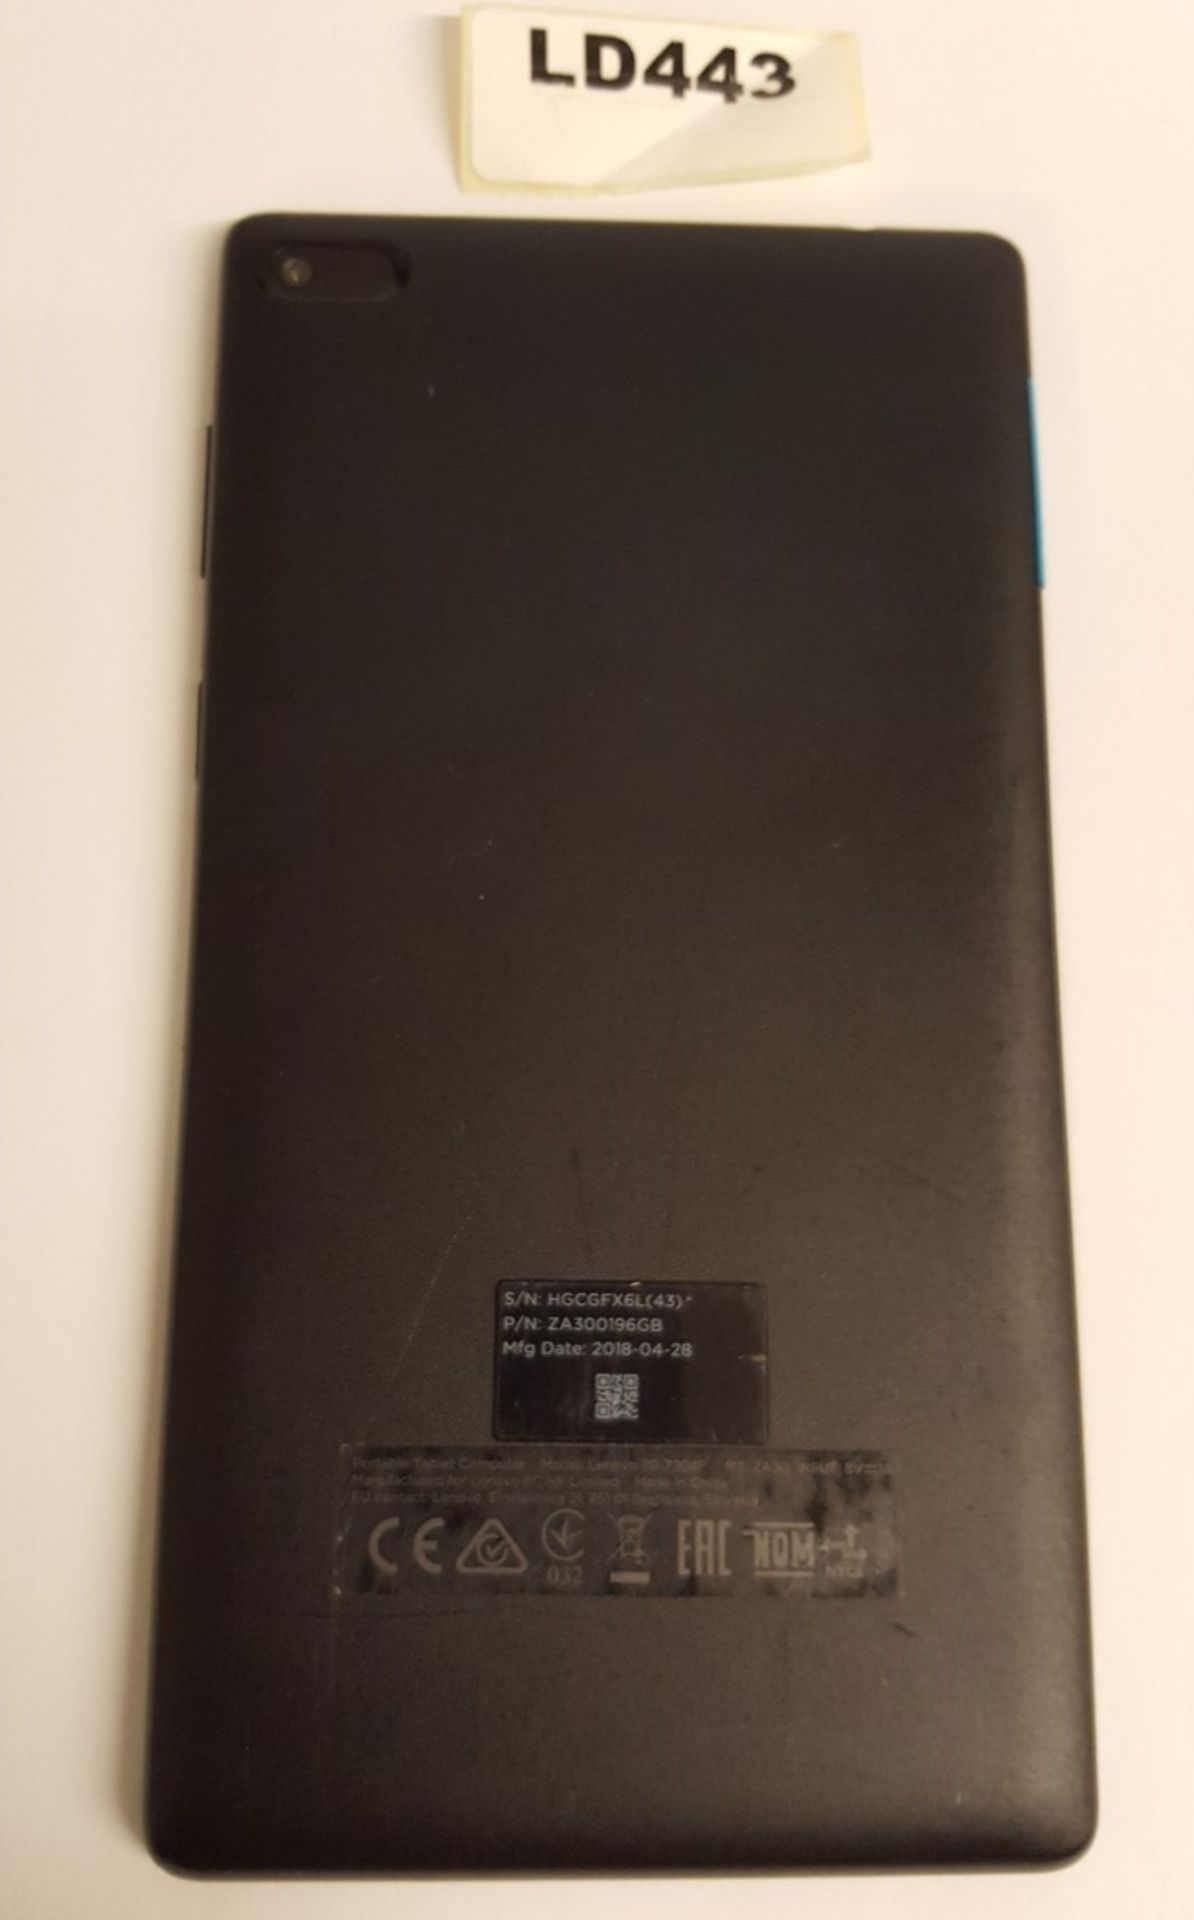 1 x Lenovo Tab 7 TB-7304F 7-inch Tablet Quad Core Processor, 1GB RAM, 16GB Storage - LD443 BR - Image 3 of 4